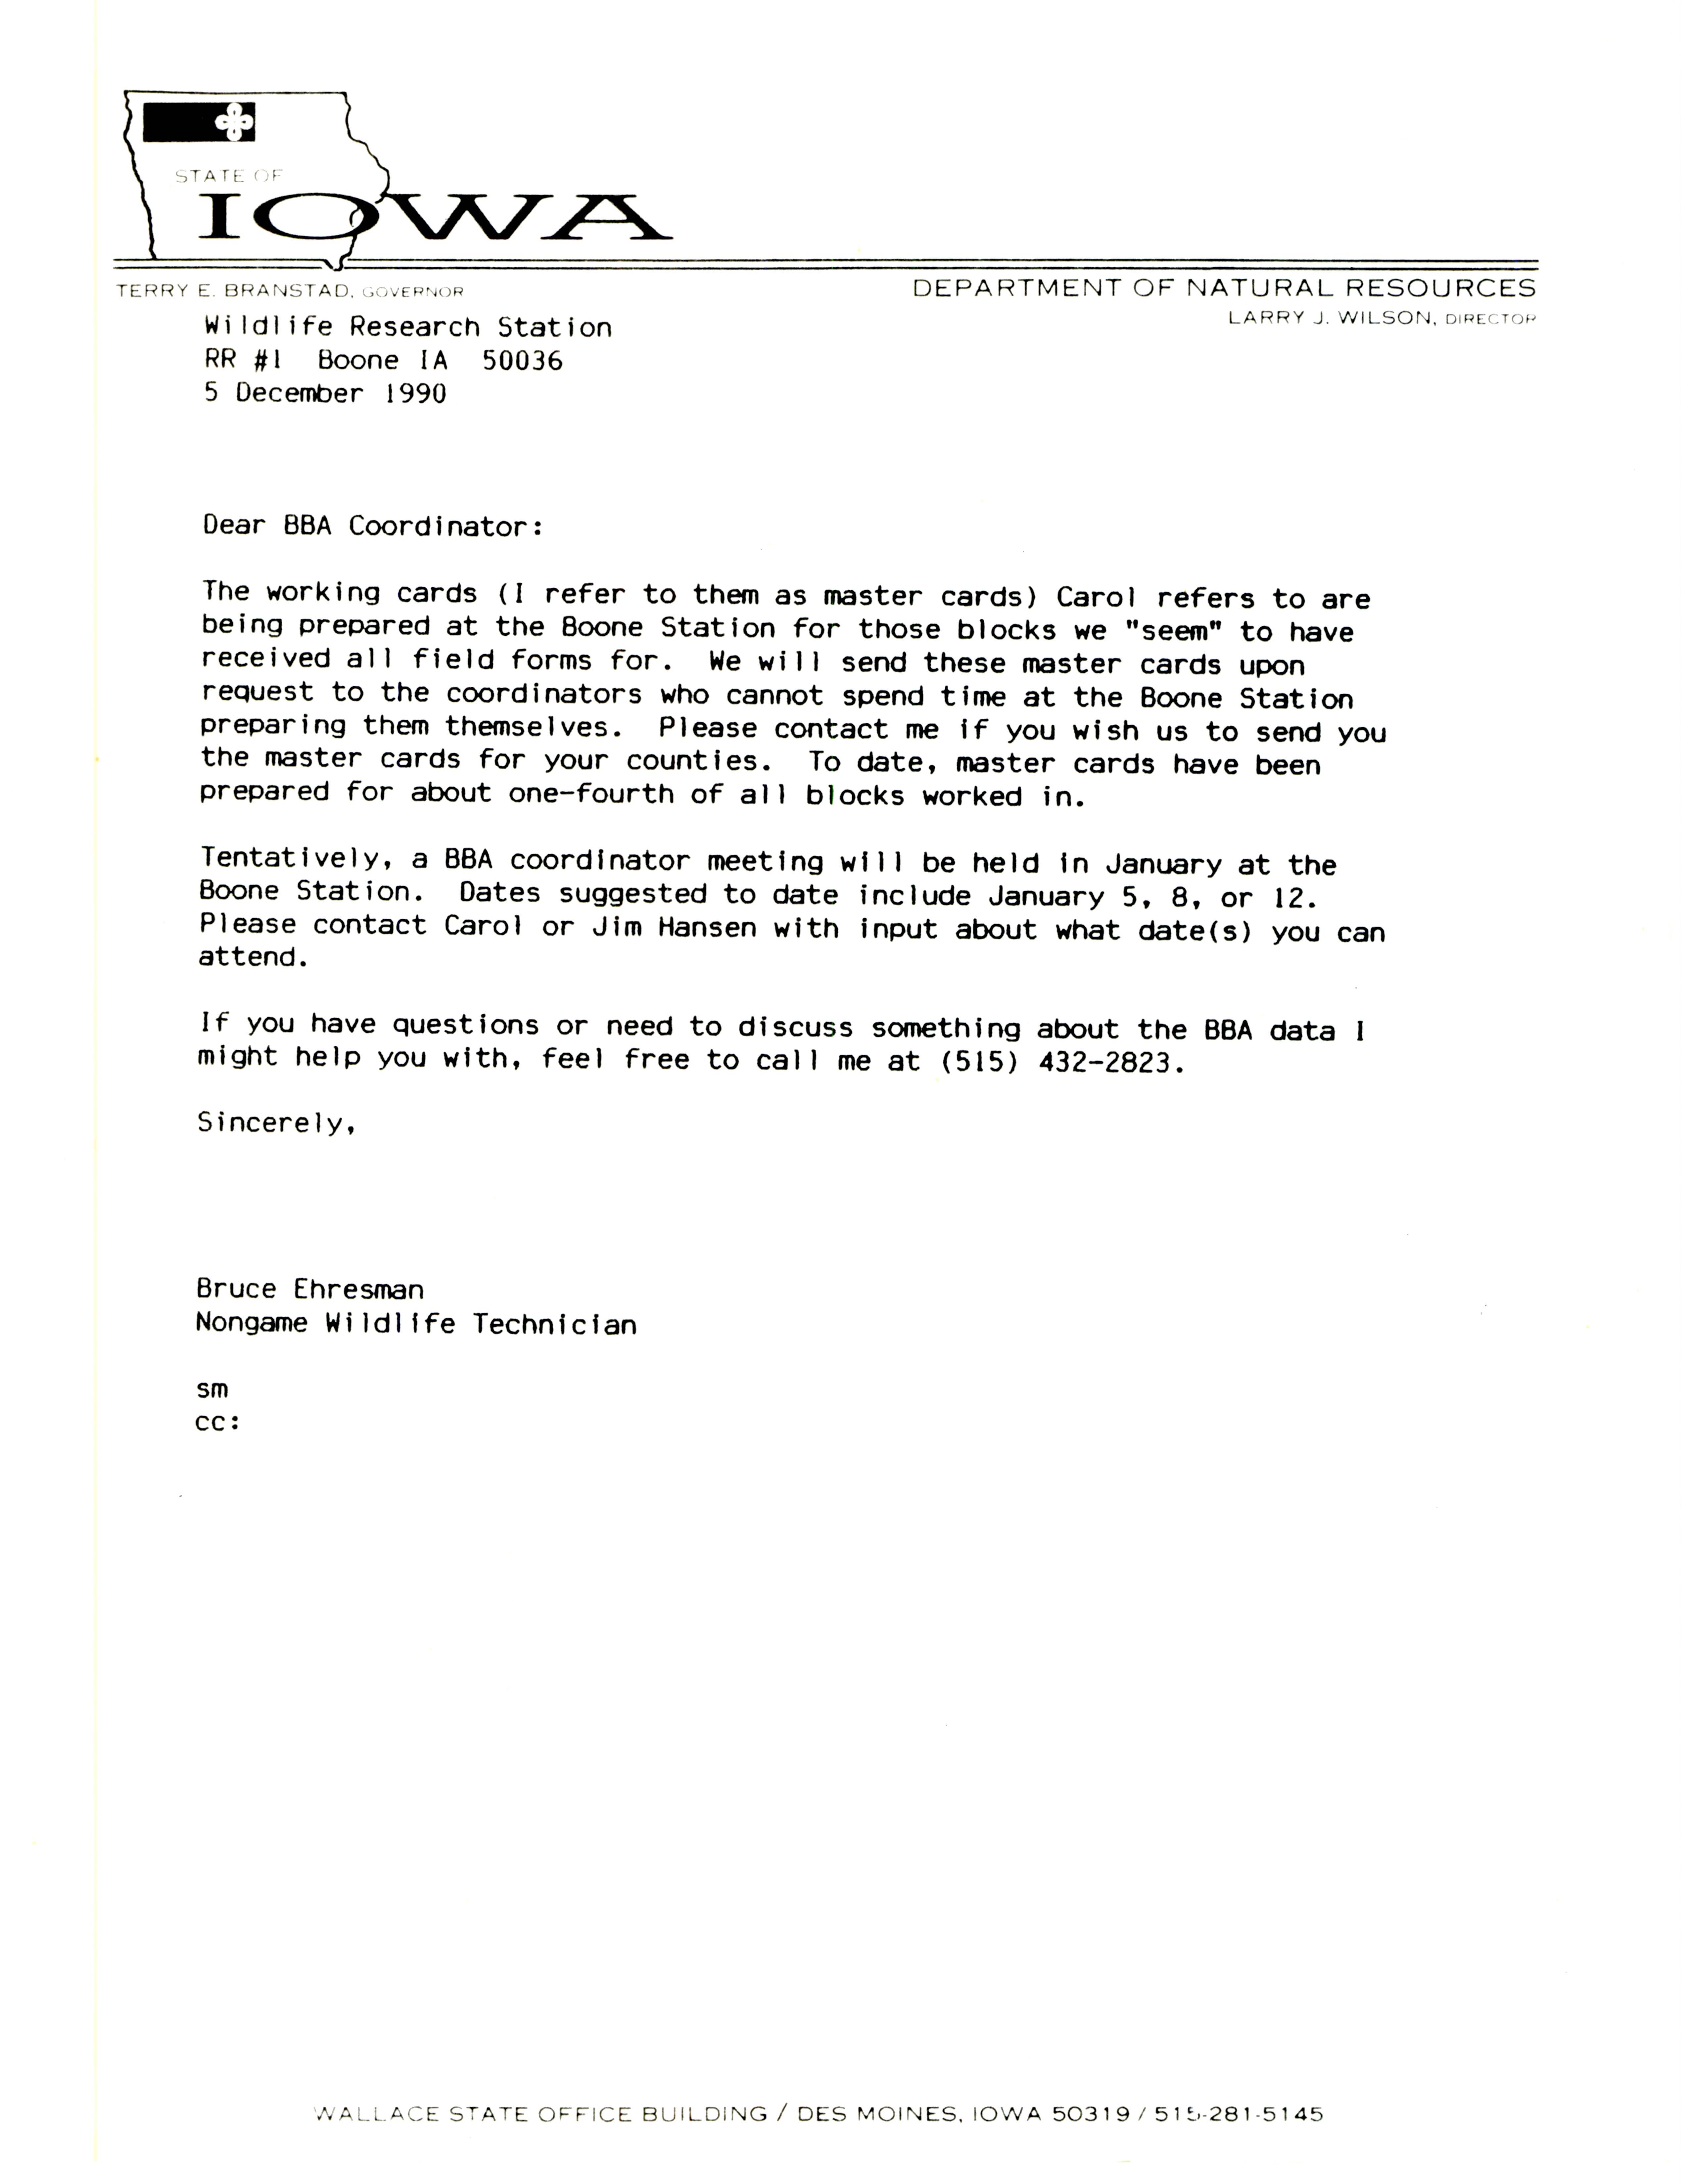 Bruce Ehresman letter to the Breeding Bird Atlas coordinator, December 5, 1990